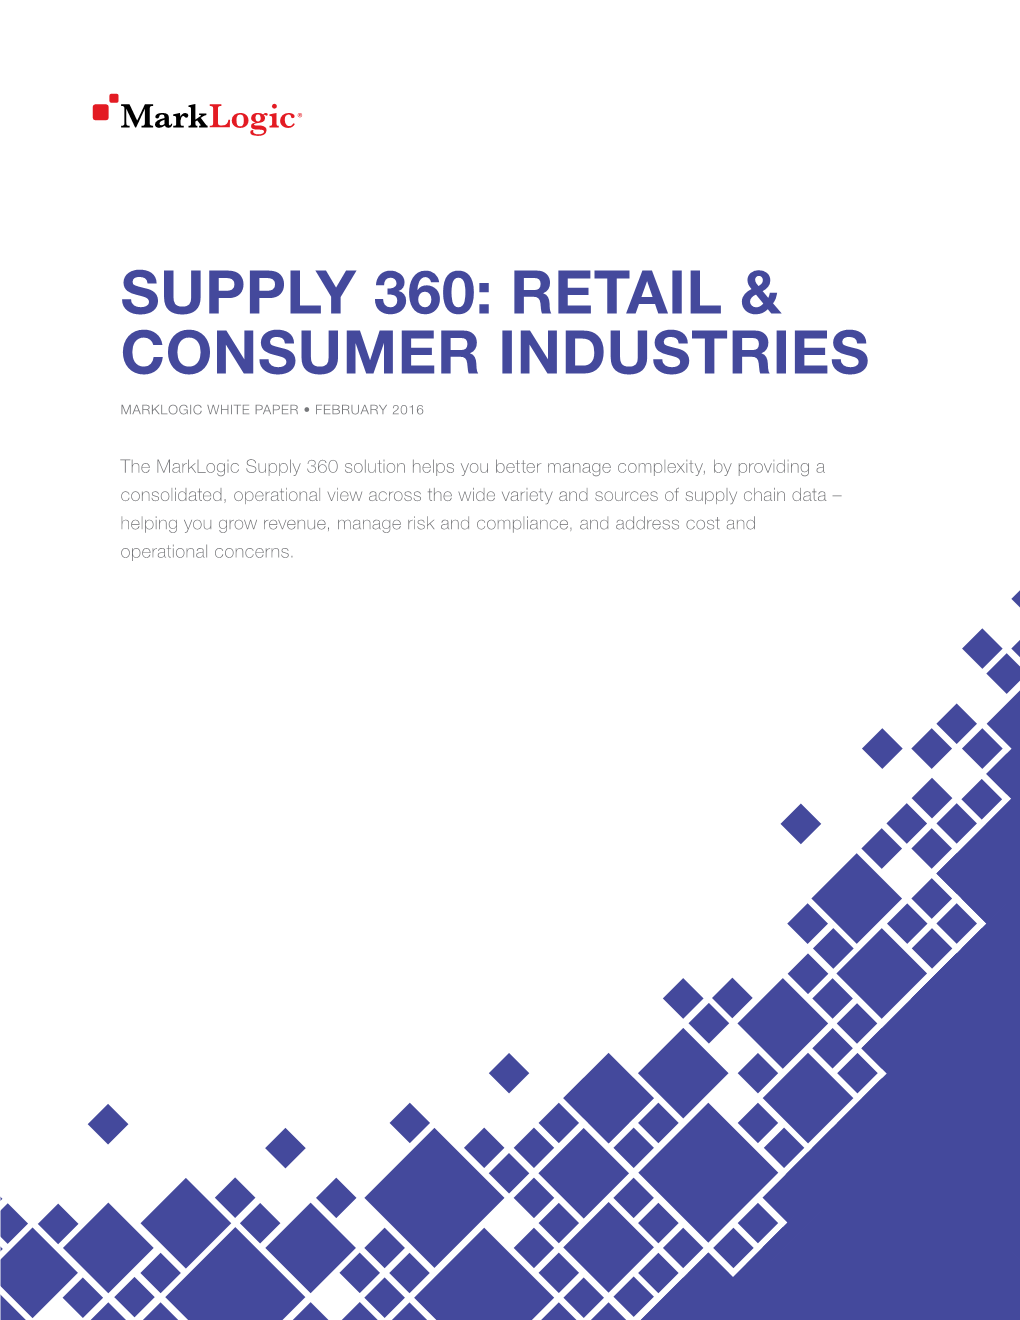 Supply 360: Retail & Consumer Industries